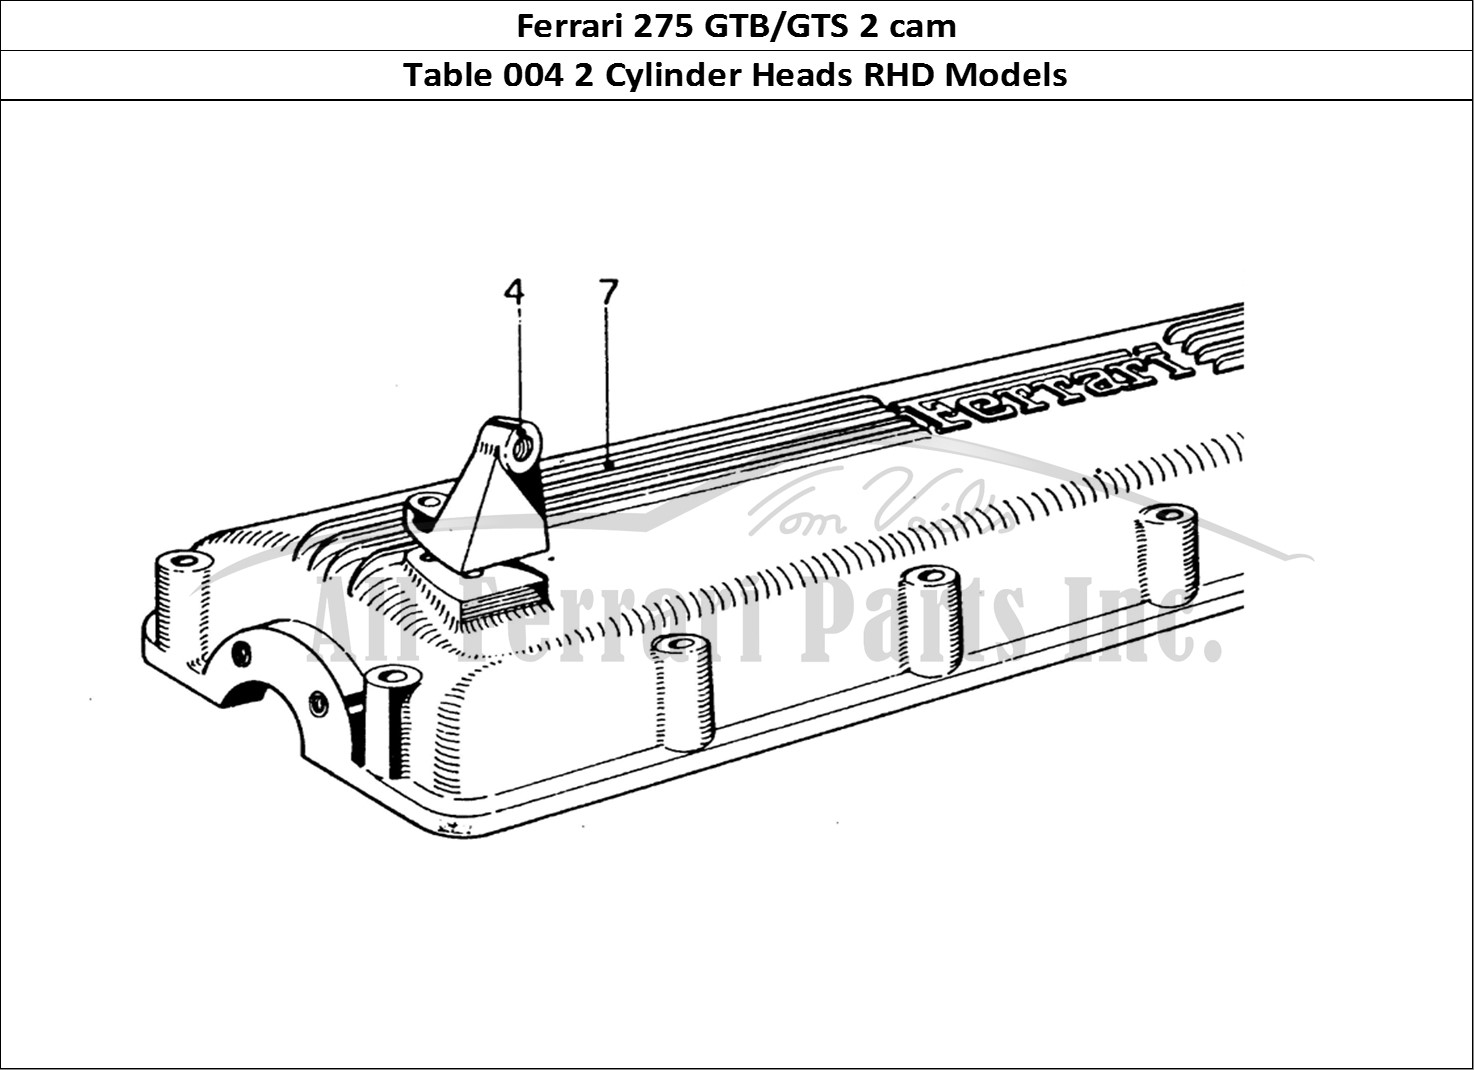 Ferrari Parts Ferrari 275 GTB/GTS 2 cam Page 004 Cylinder Heads (RHD model